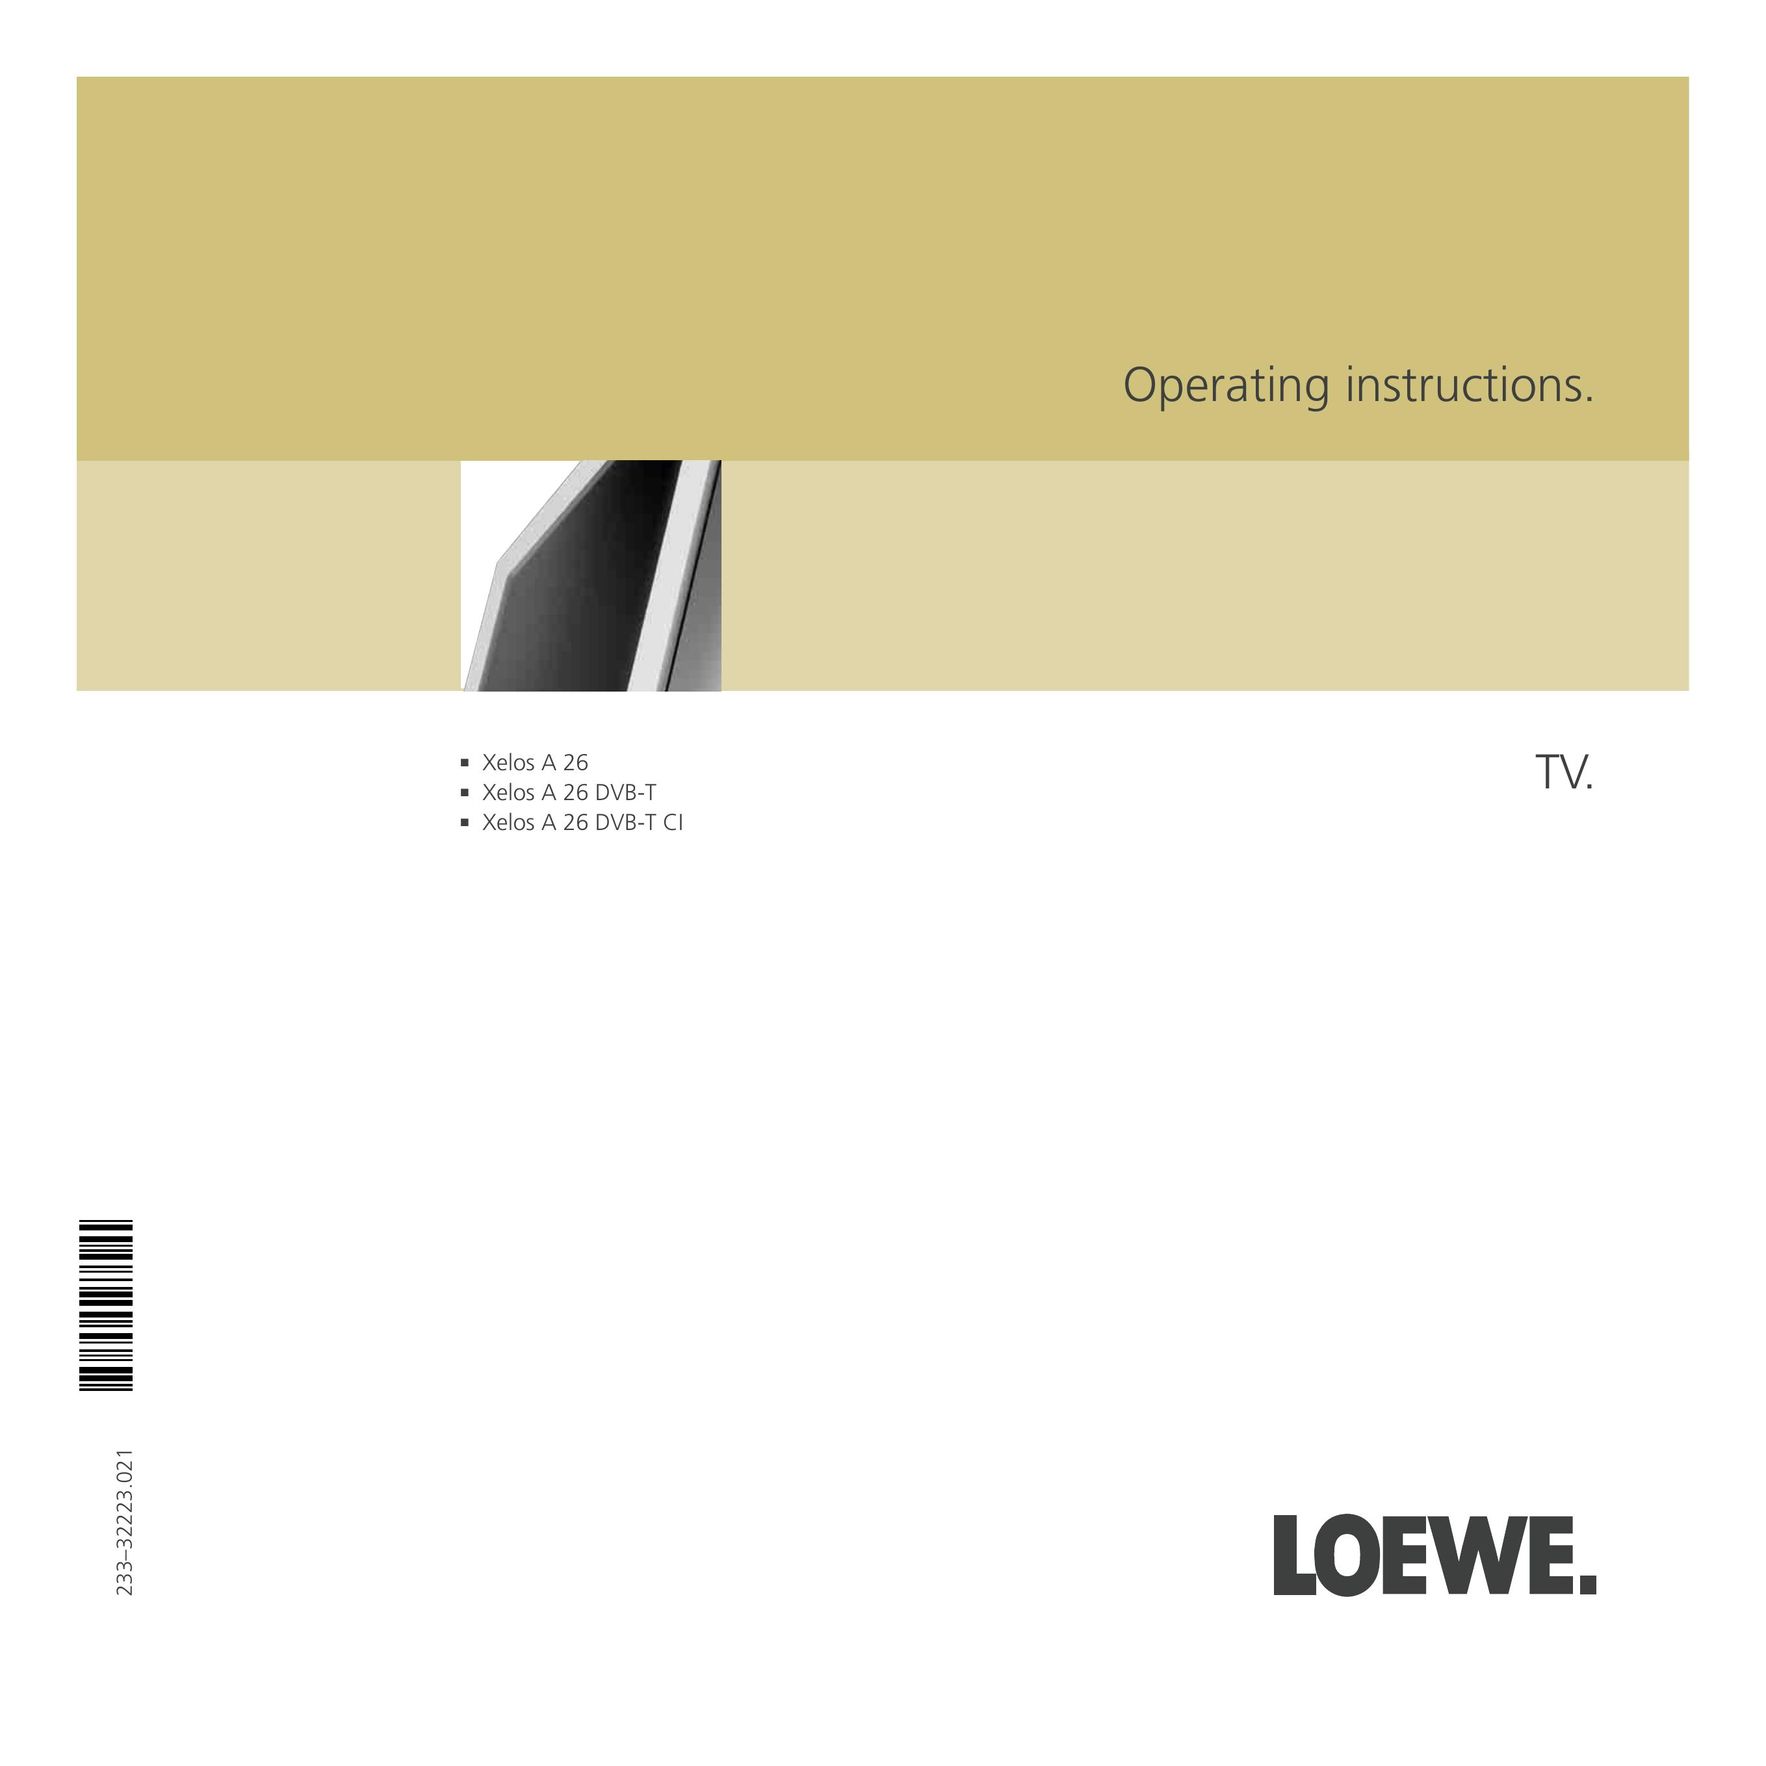 Loewe A 26, A 26 DVB-T, A 26 DVB-T CI Flat Panel Television User Manual